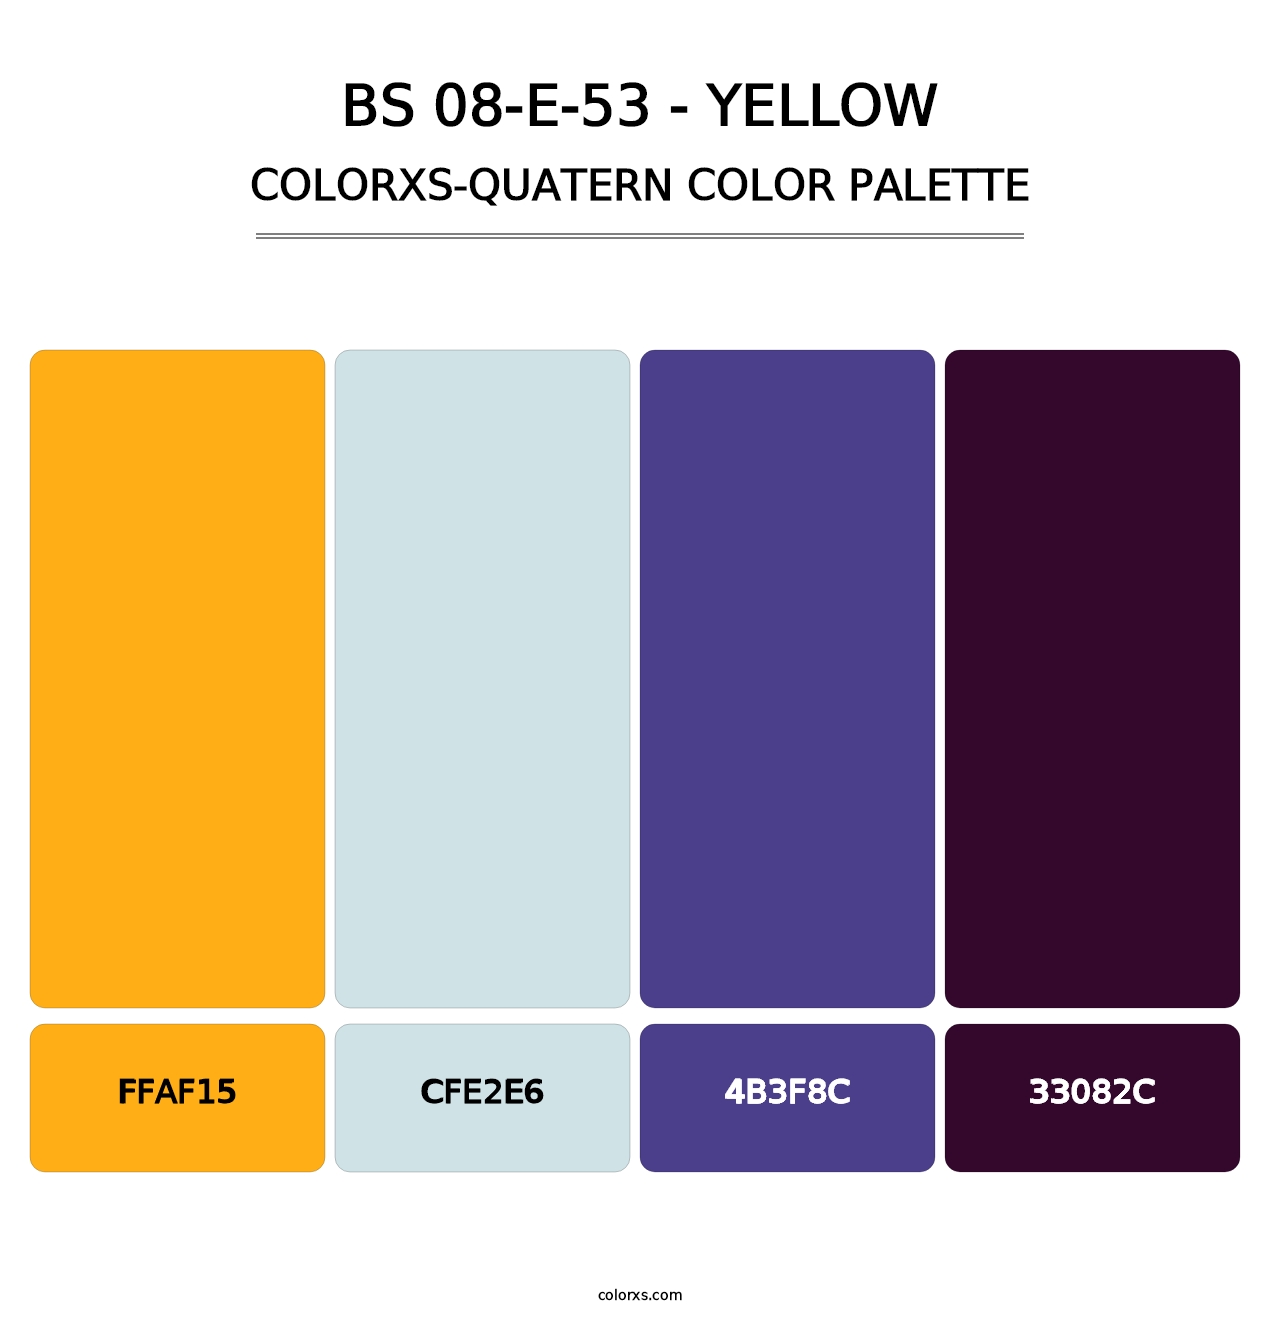 BS 08-E-53 - Yellow - Colorxs Quatern Palette